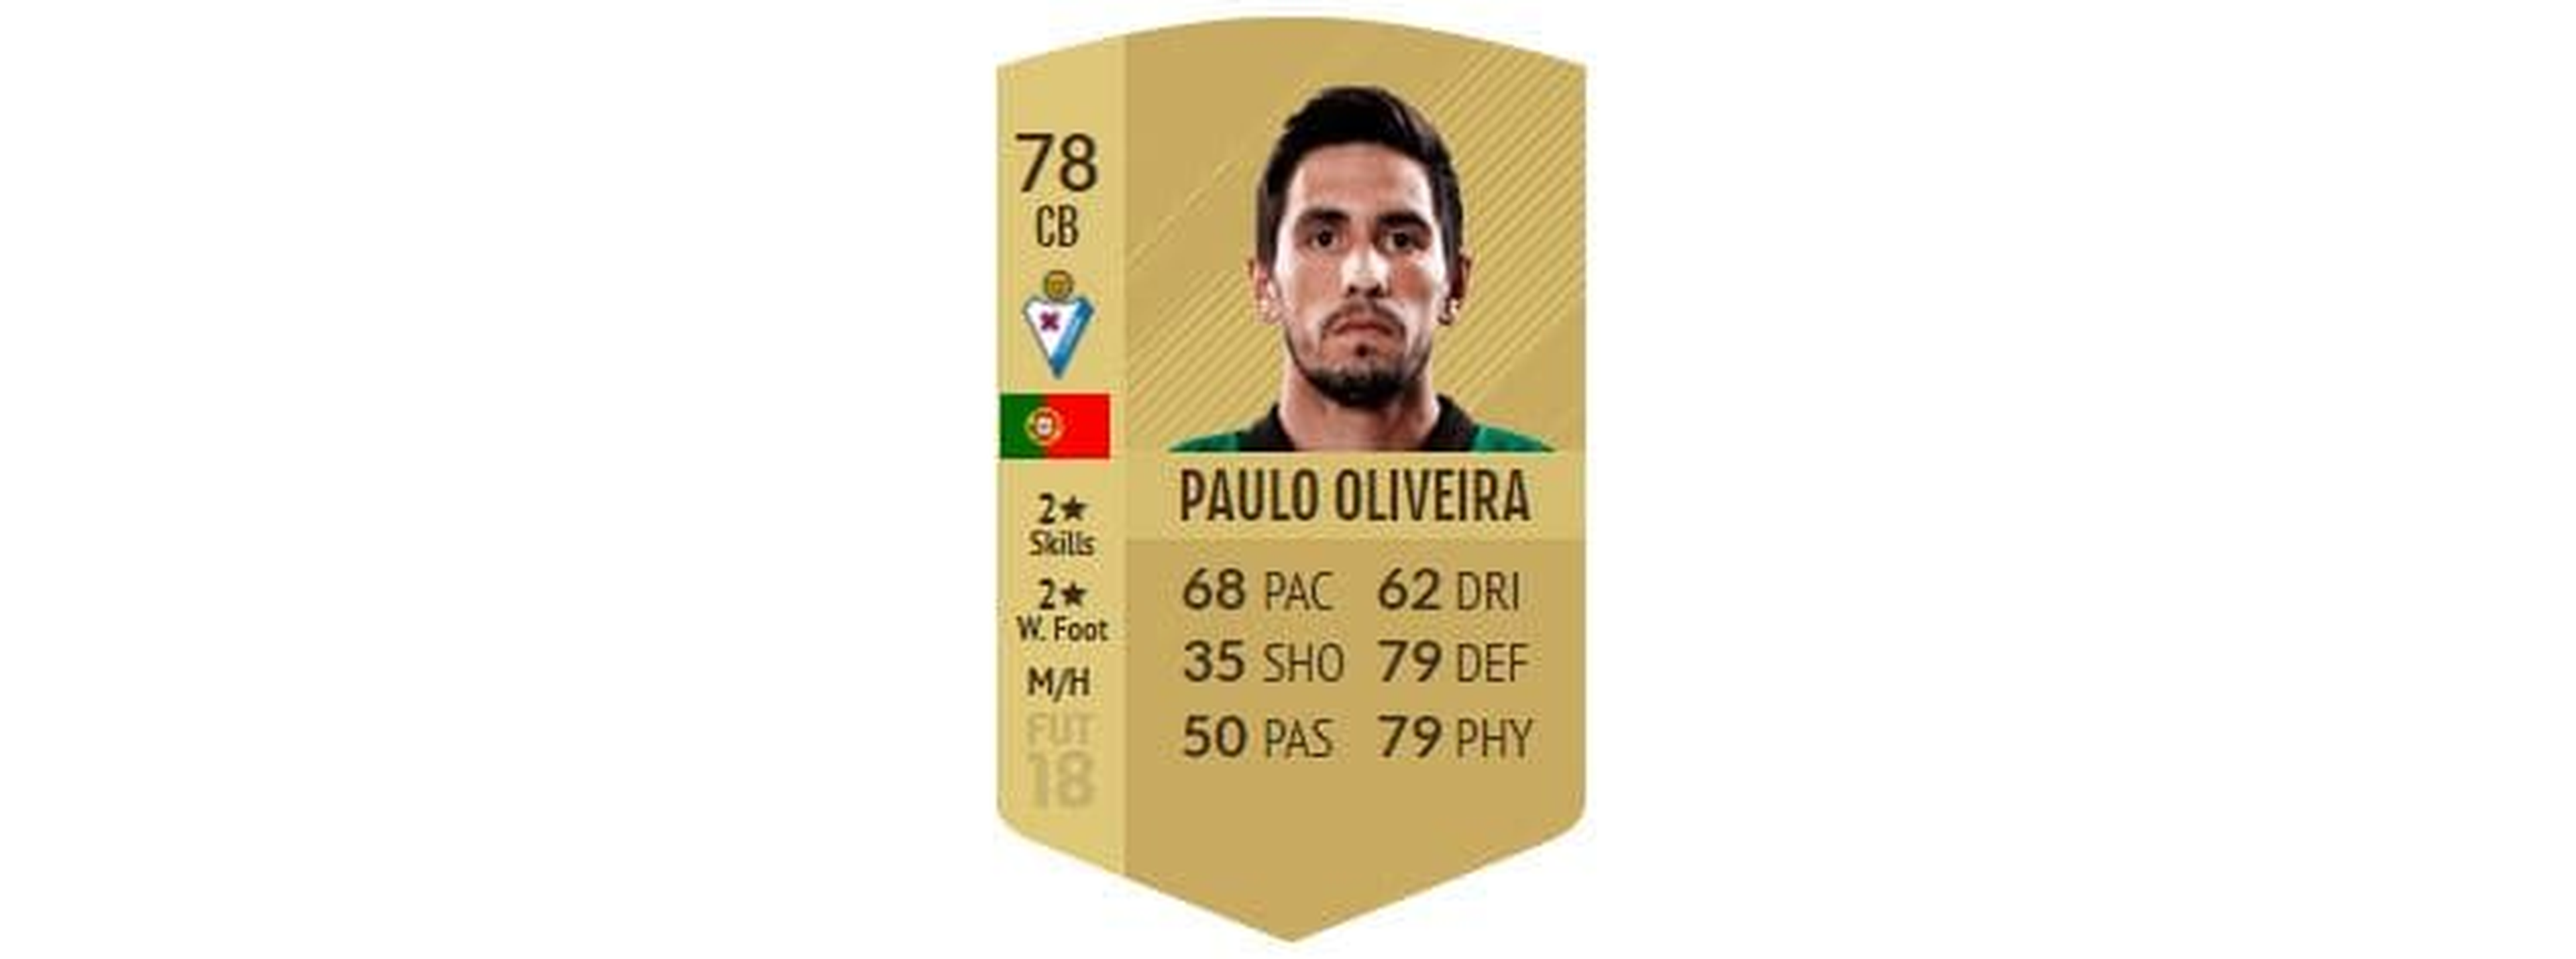 FIFA 18 - Paulo Oliveira